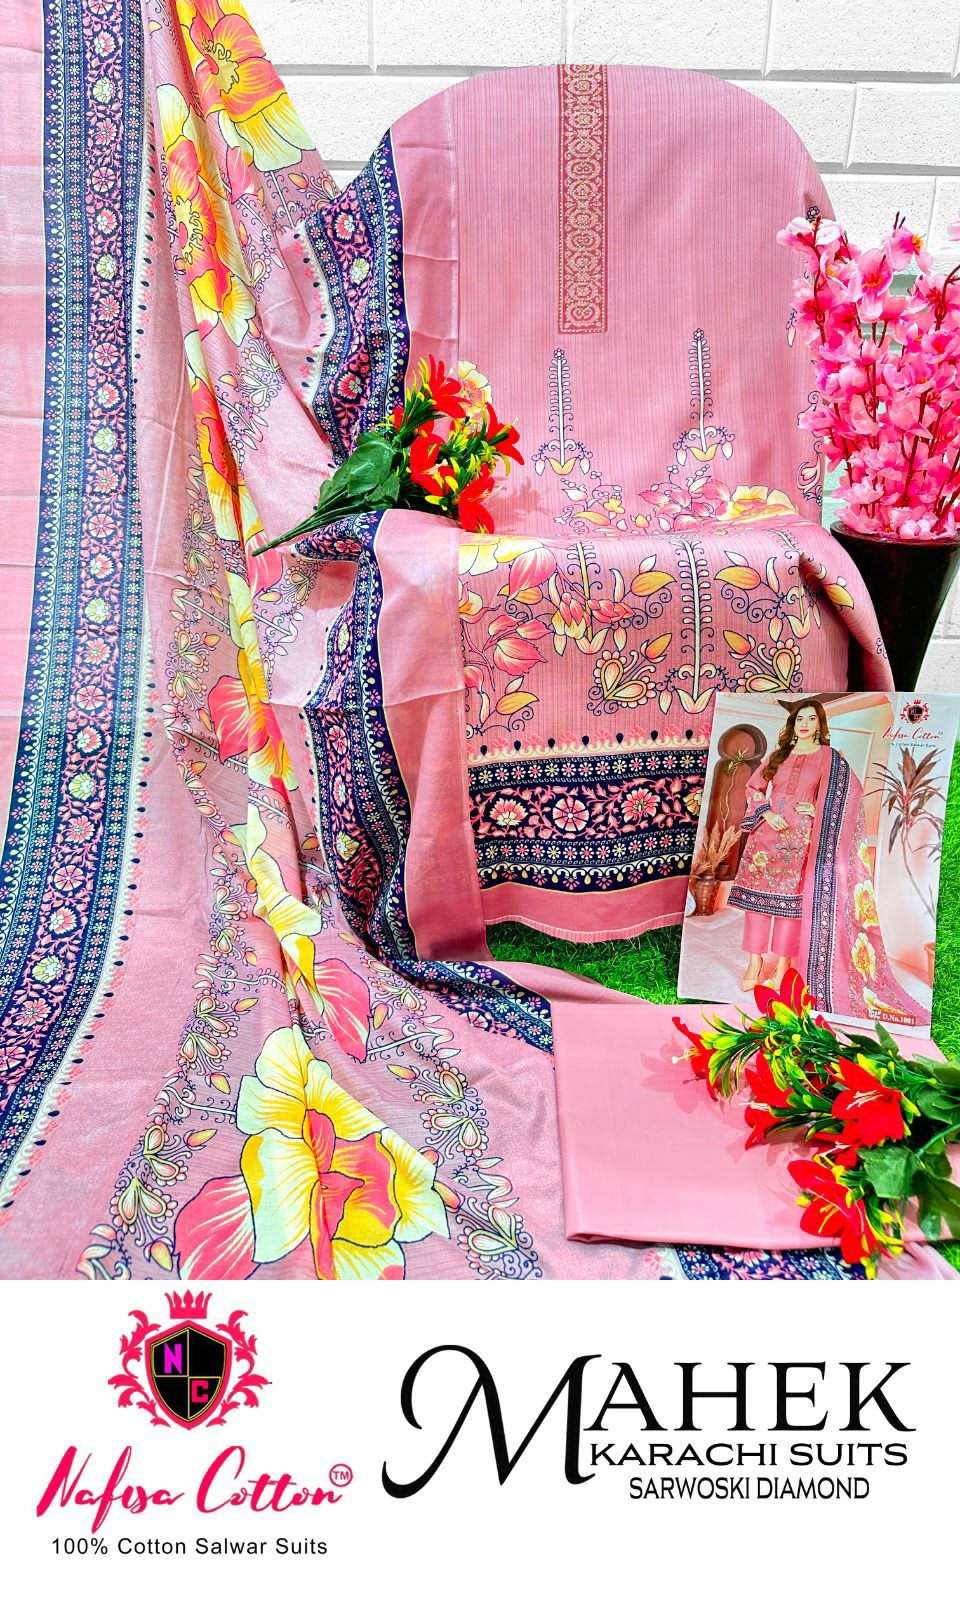 nafisha cotton mahek karachi suits 1001-1010 series latest pakistani salwar kameez wholesaler surat gujarat